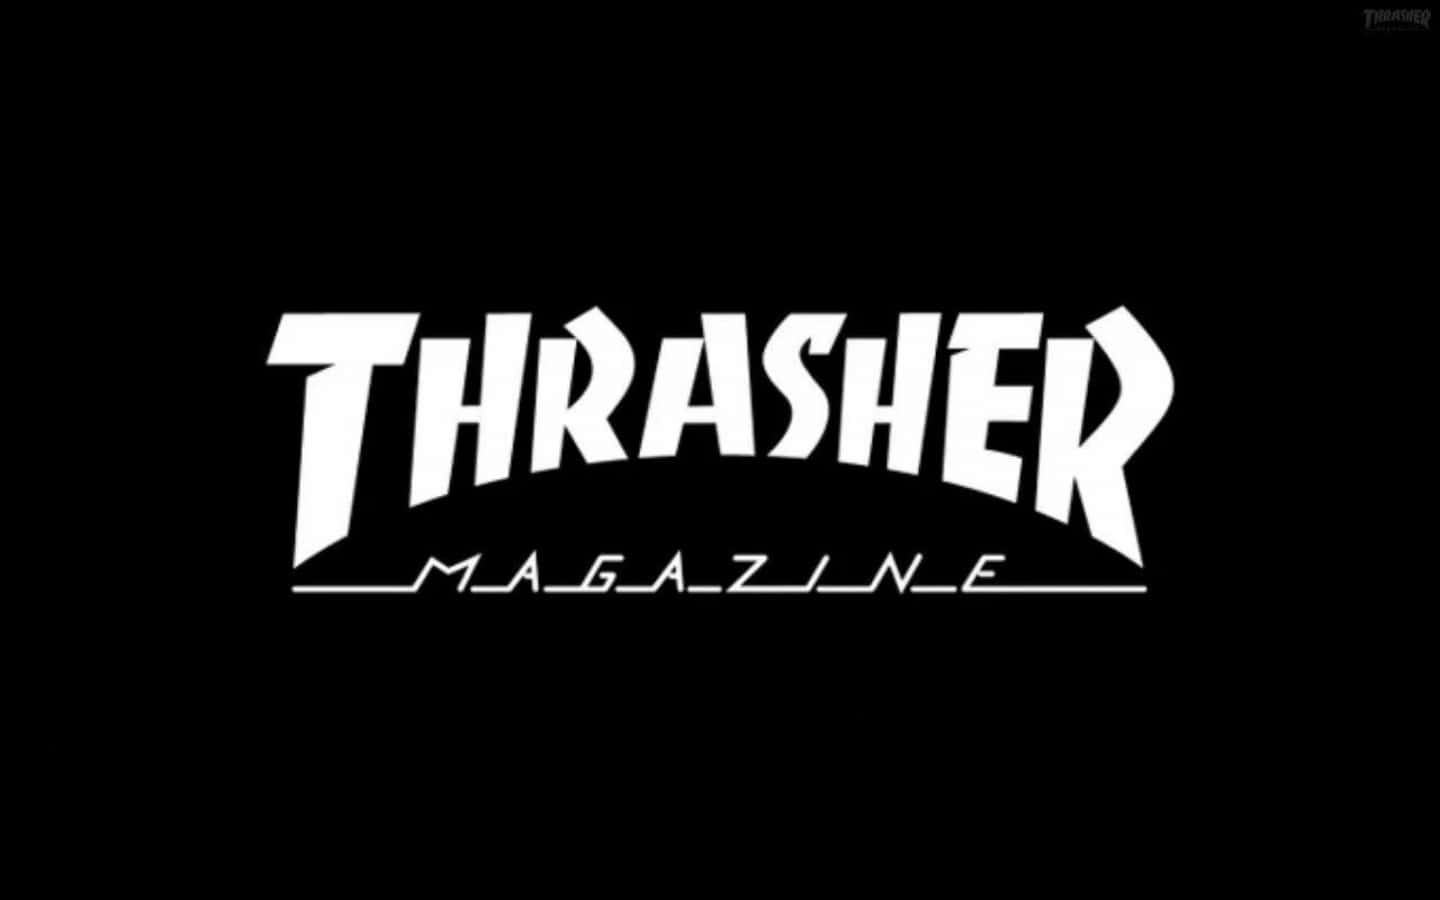 Logotipode La Revista Thrasher Sobre Un Fondo Negro